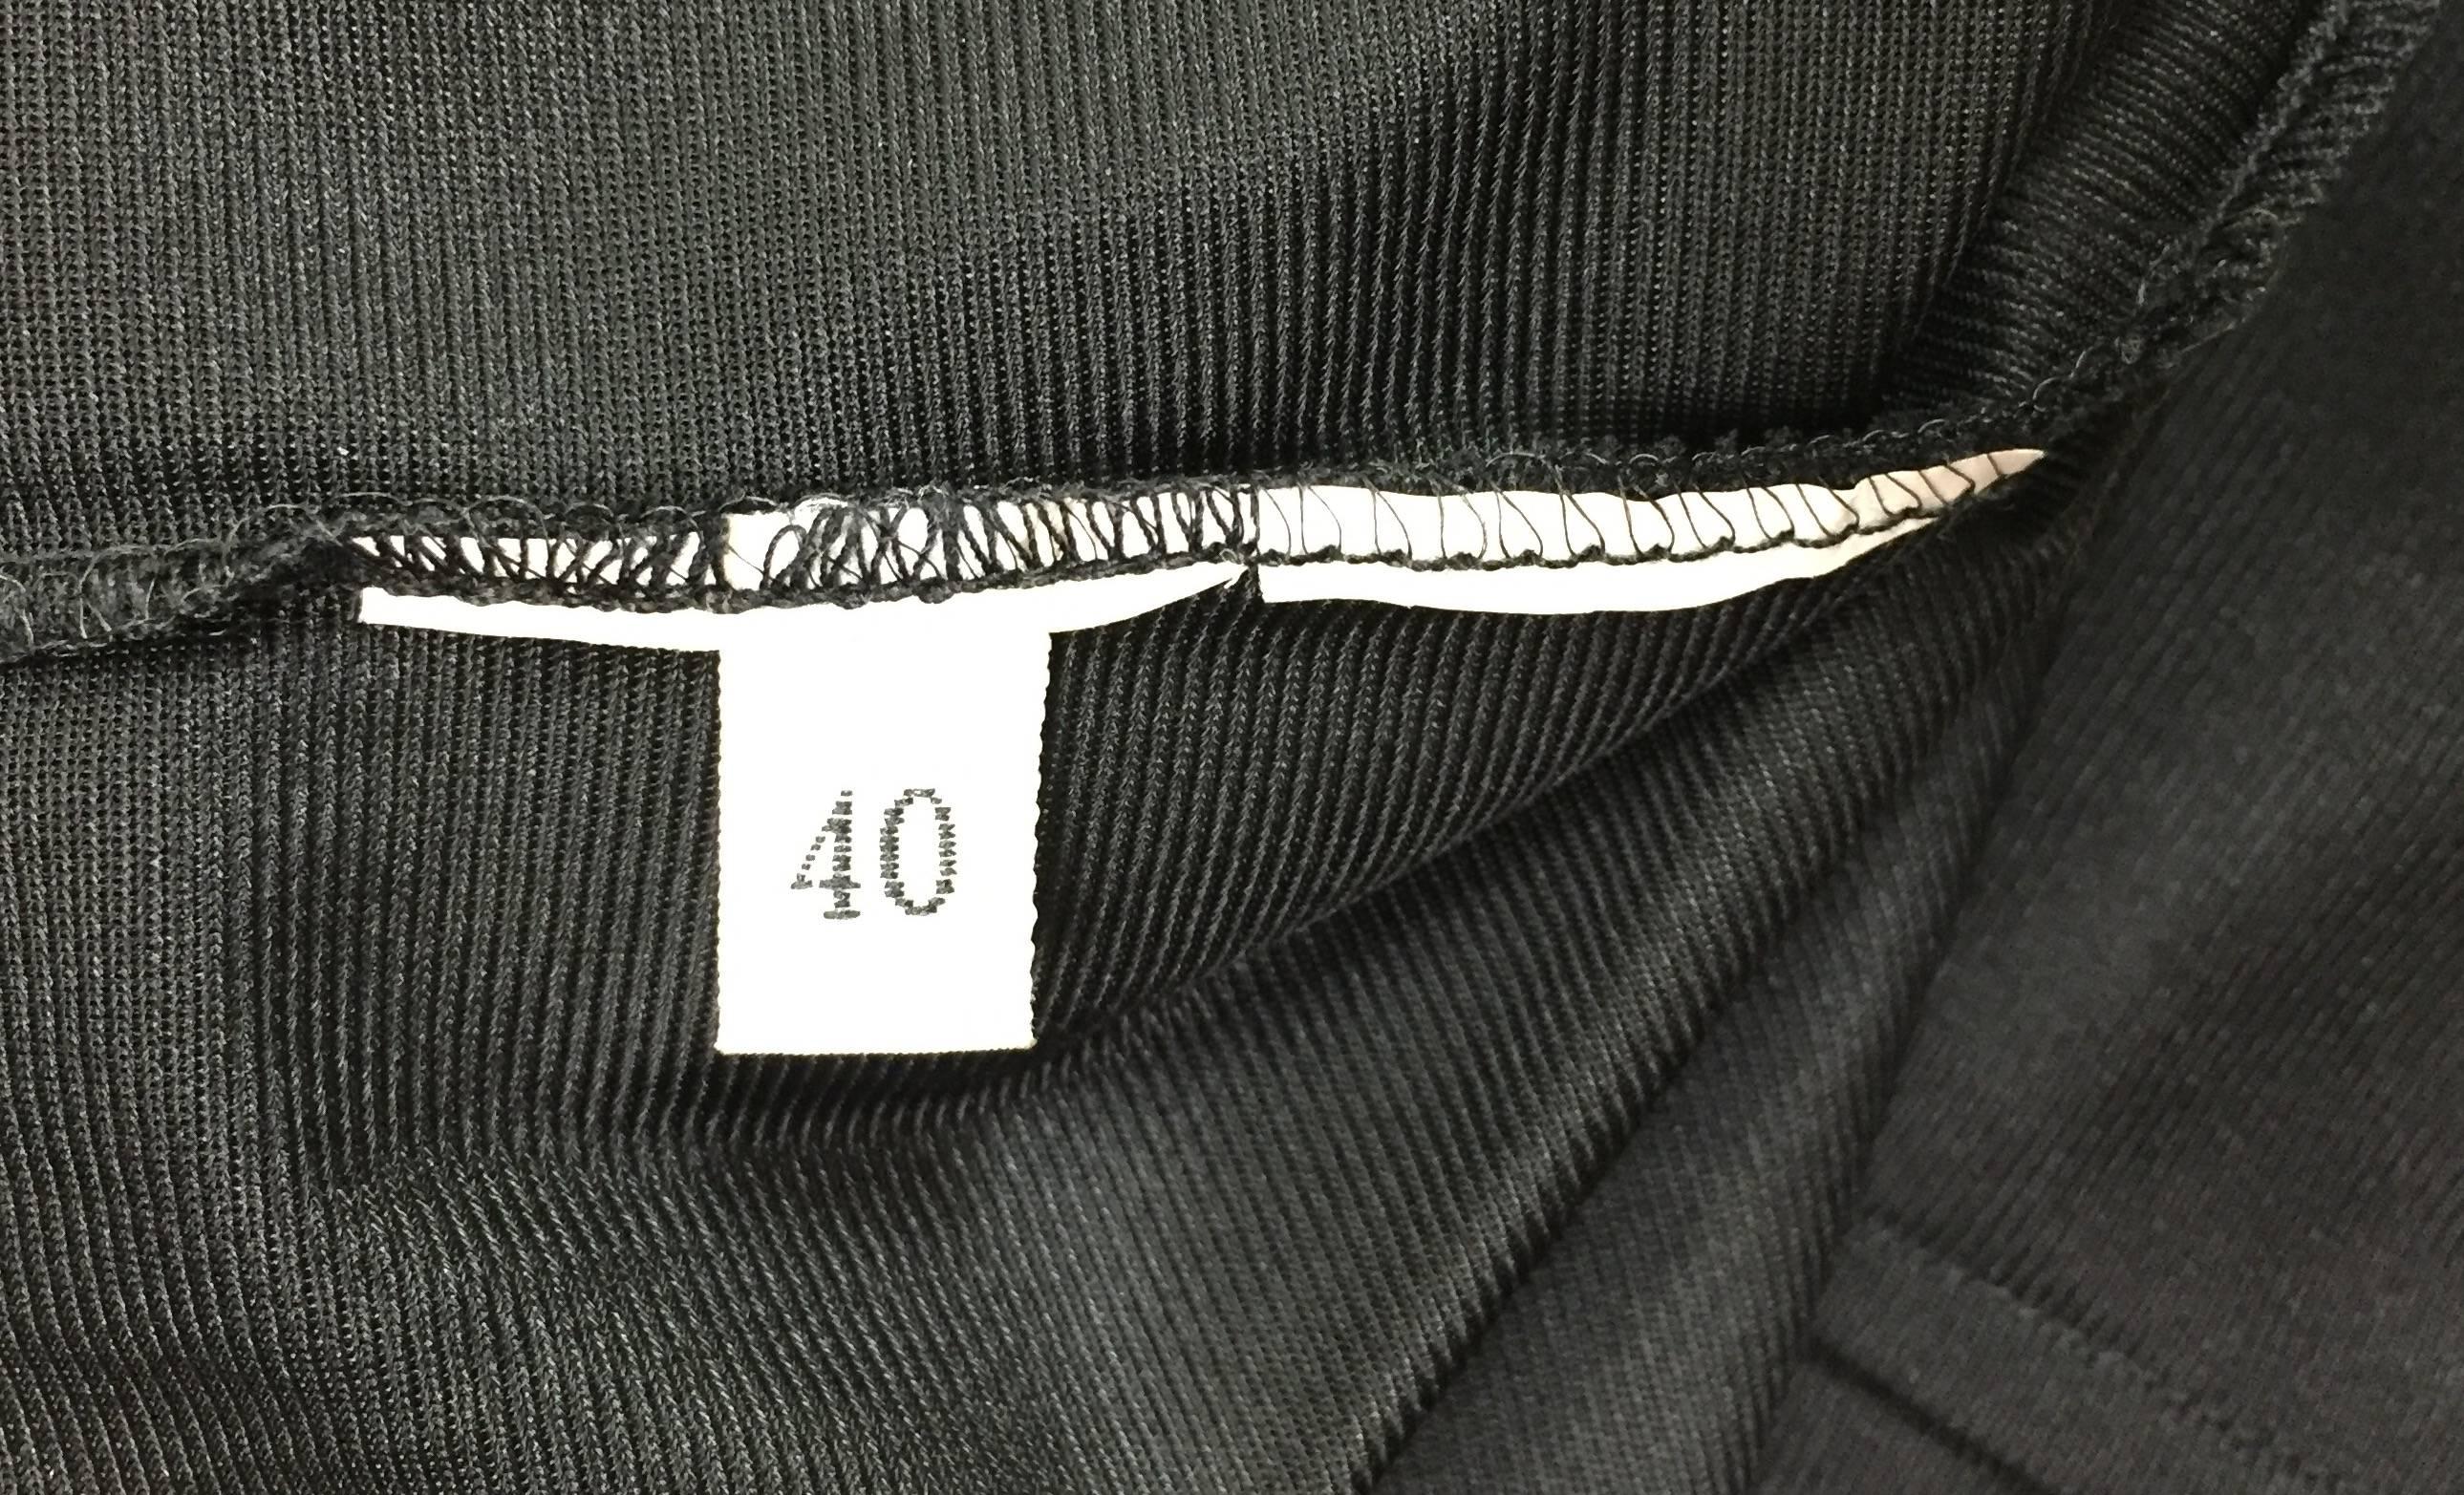 S/S 1998 Dolce & Gabbana Black Sheer Mesh Lace Underlay Wiggle Pencil Dress 1